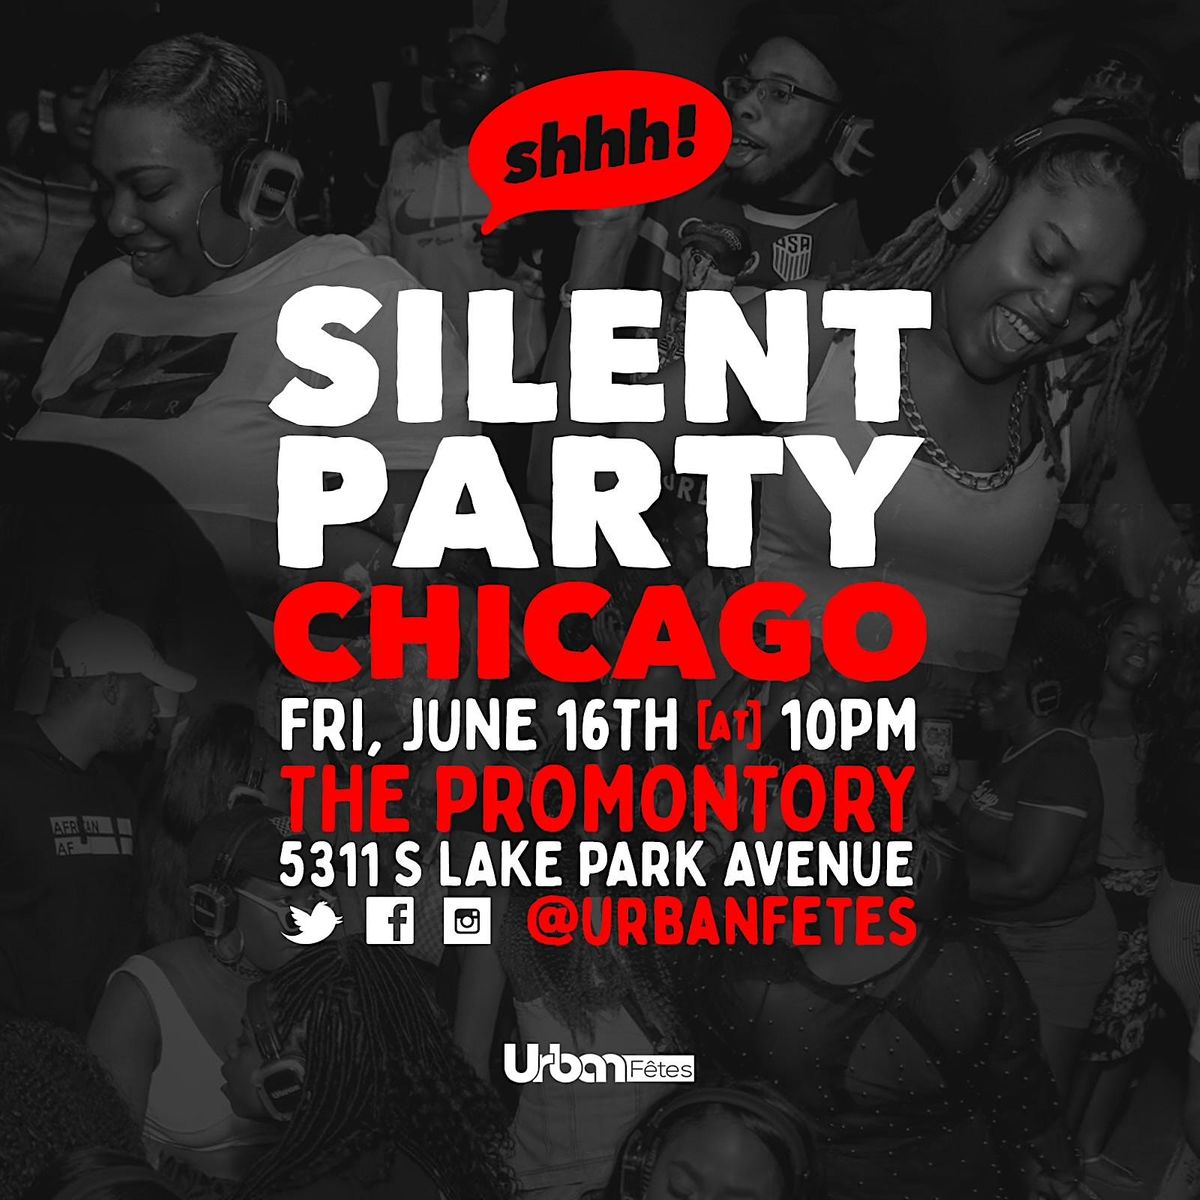 SILENT PARTY CHICAGO "SHAKE, BOUNCE, DROP, TWERK"